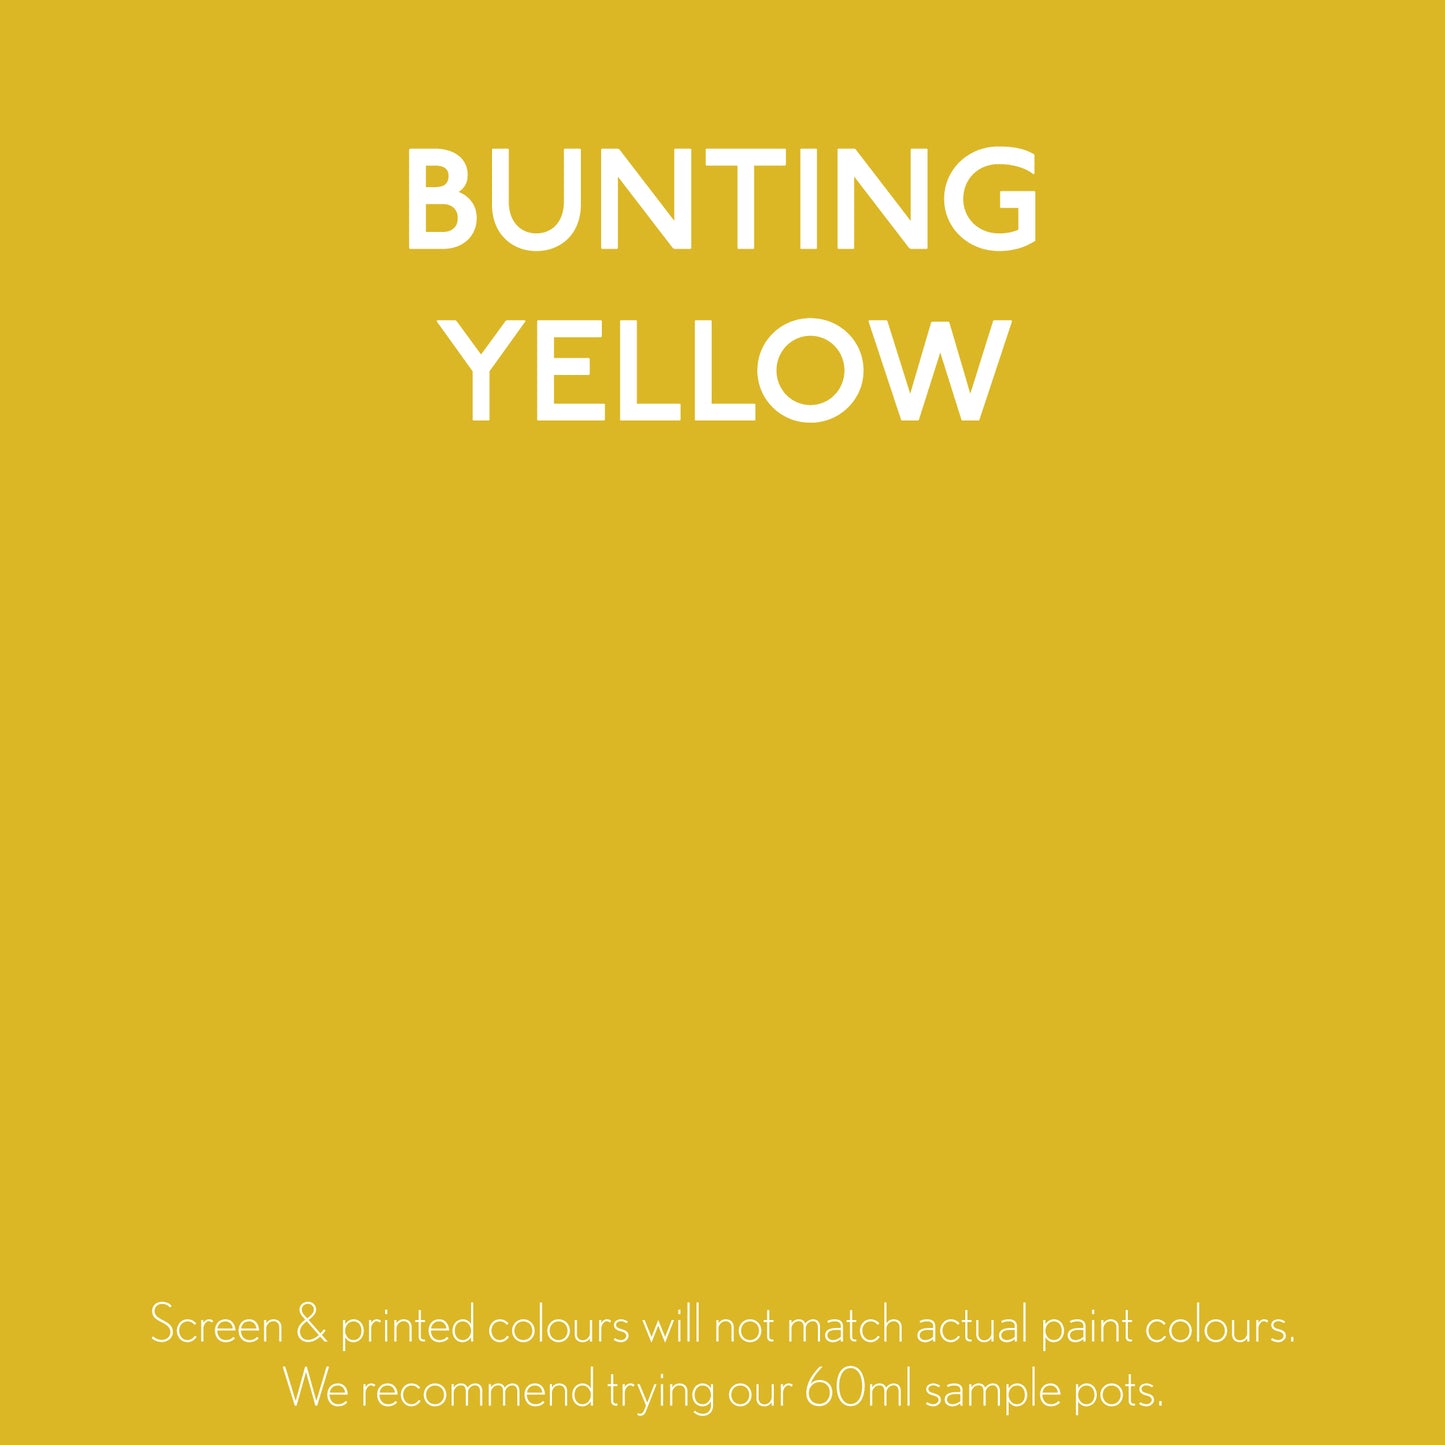 Bunting Yellow